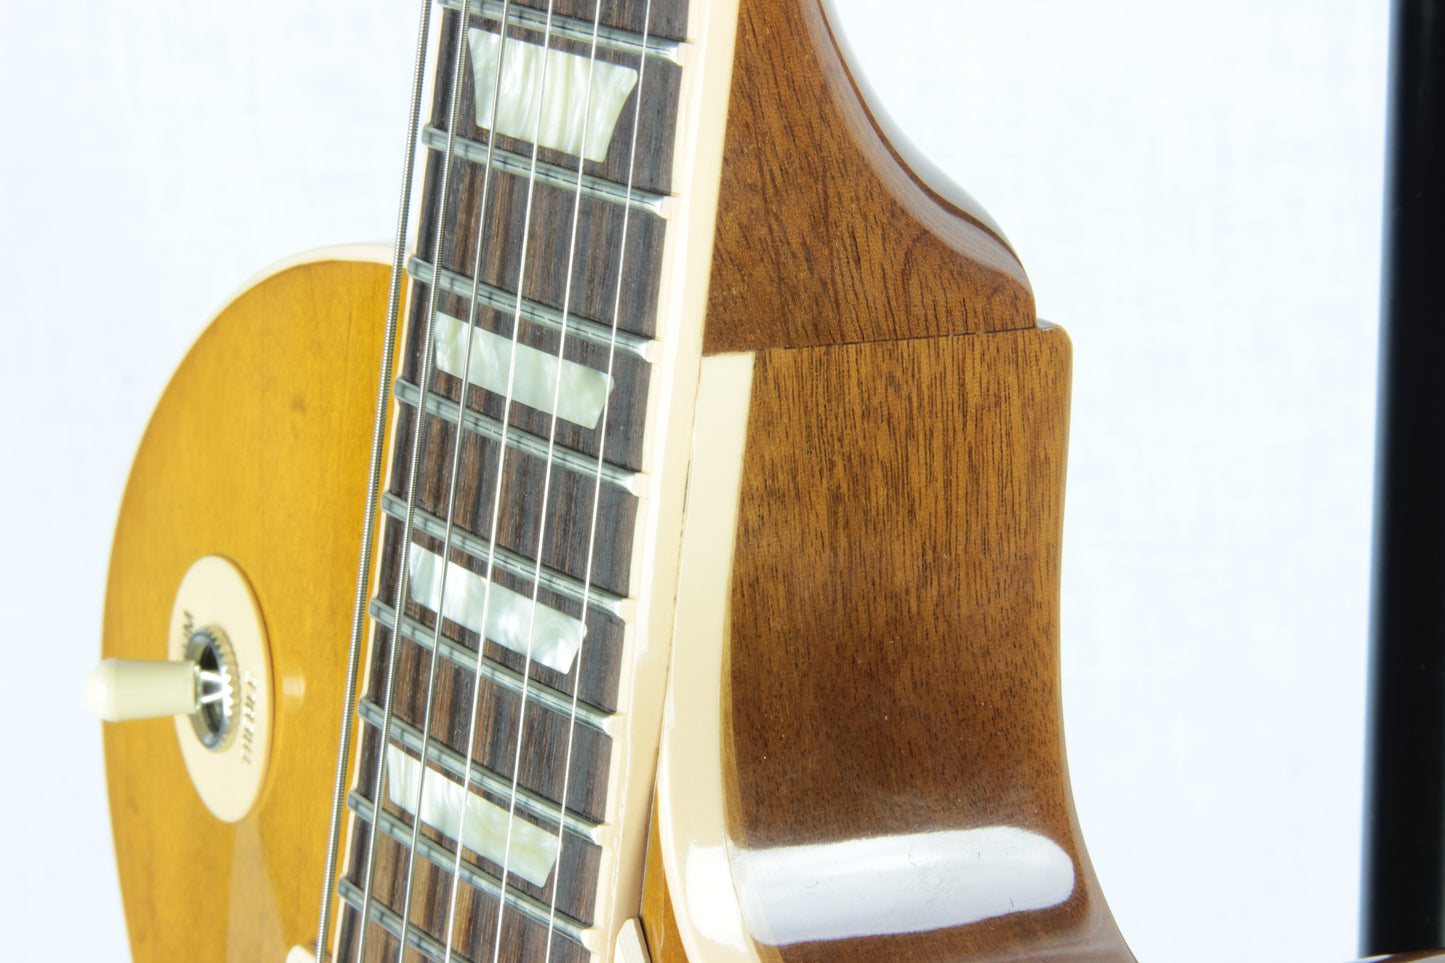 2019 Gibson Les Paul Classic Honeyburst 60's Neck w Zebra Pickups! w OHSC!